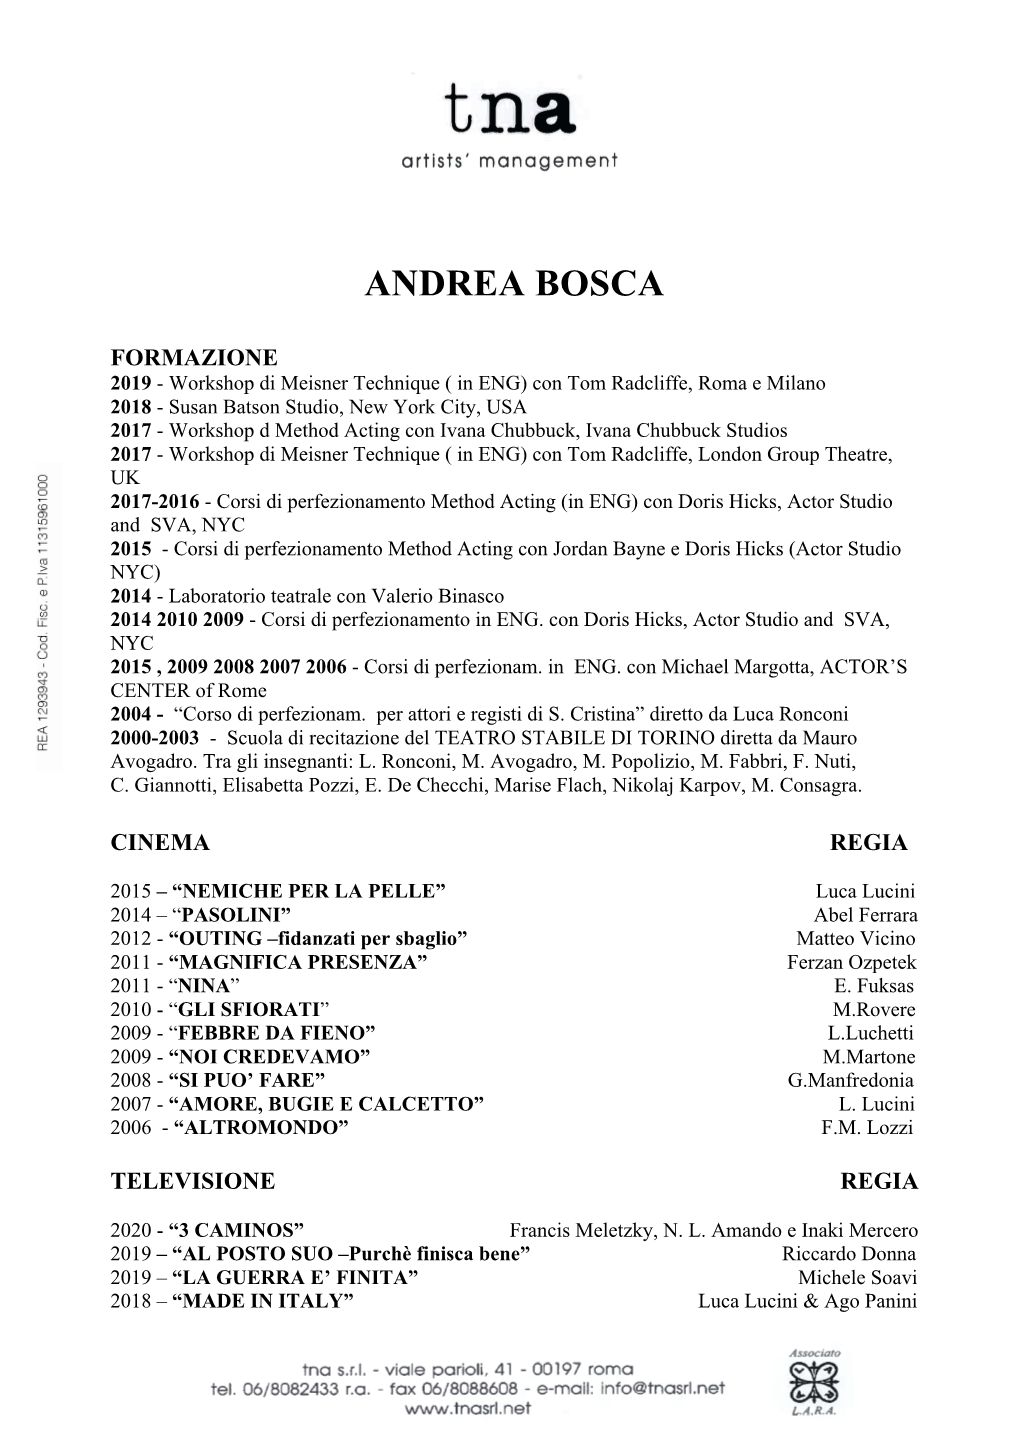 Andrea Bosca